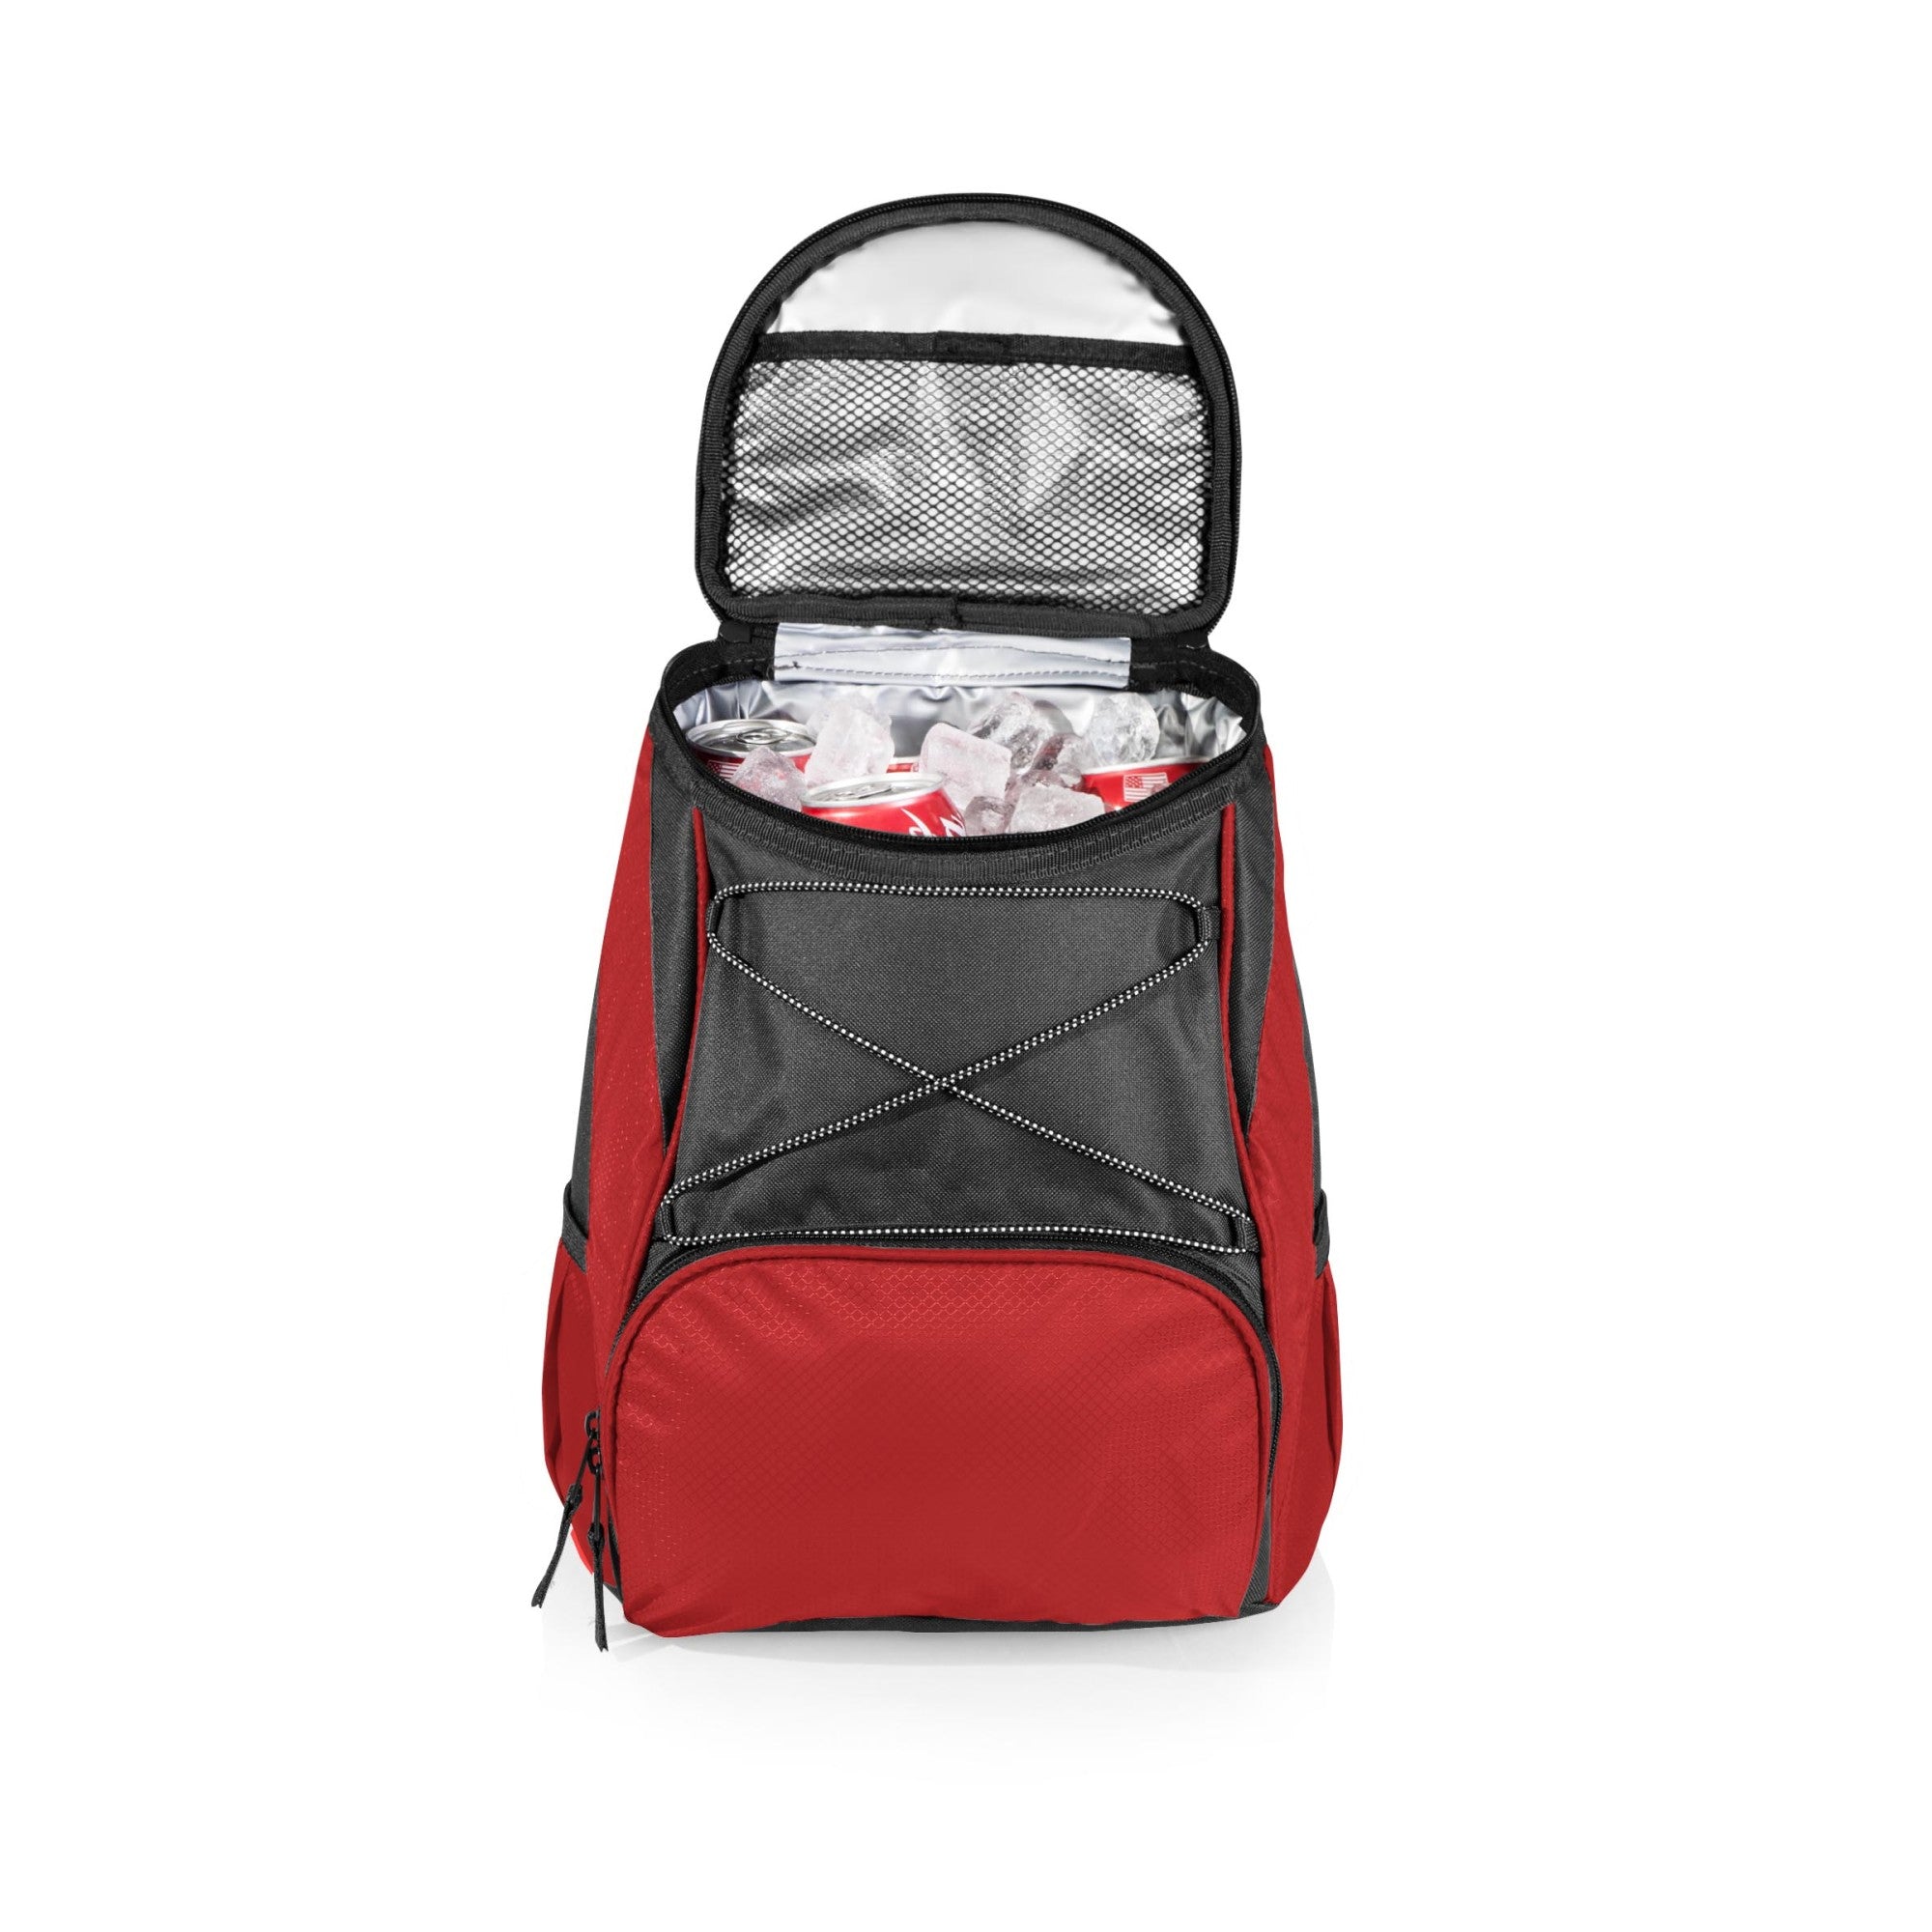 Backpack Cooler, Insulated Cooler Backpack